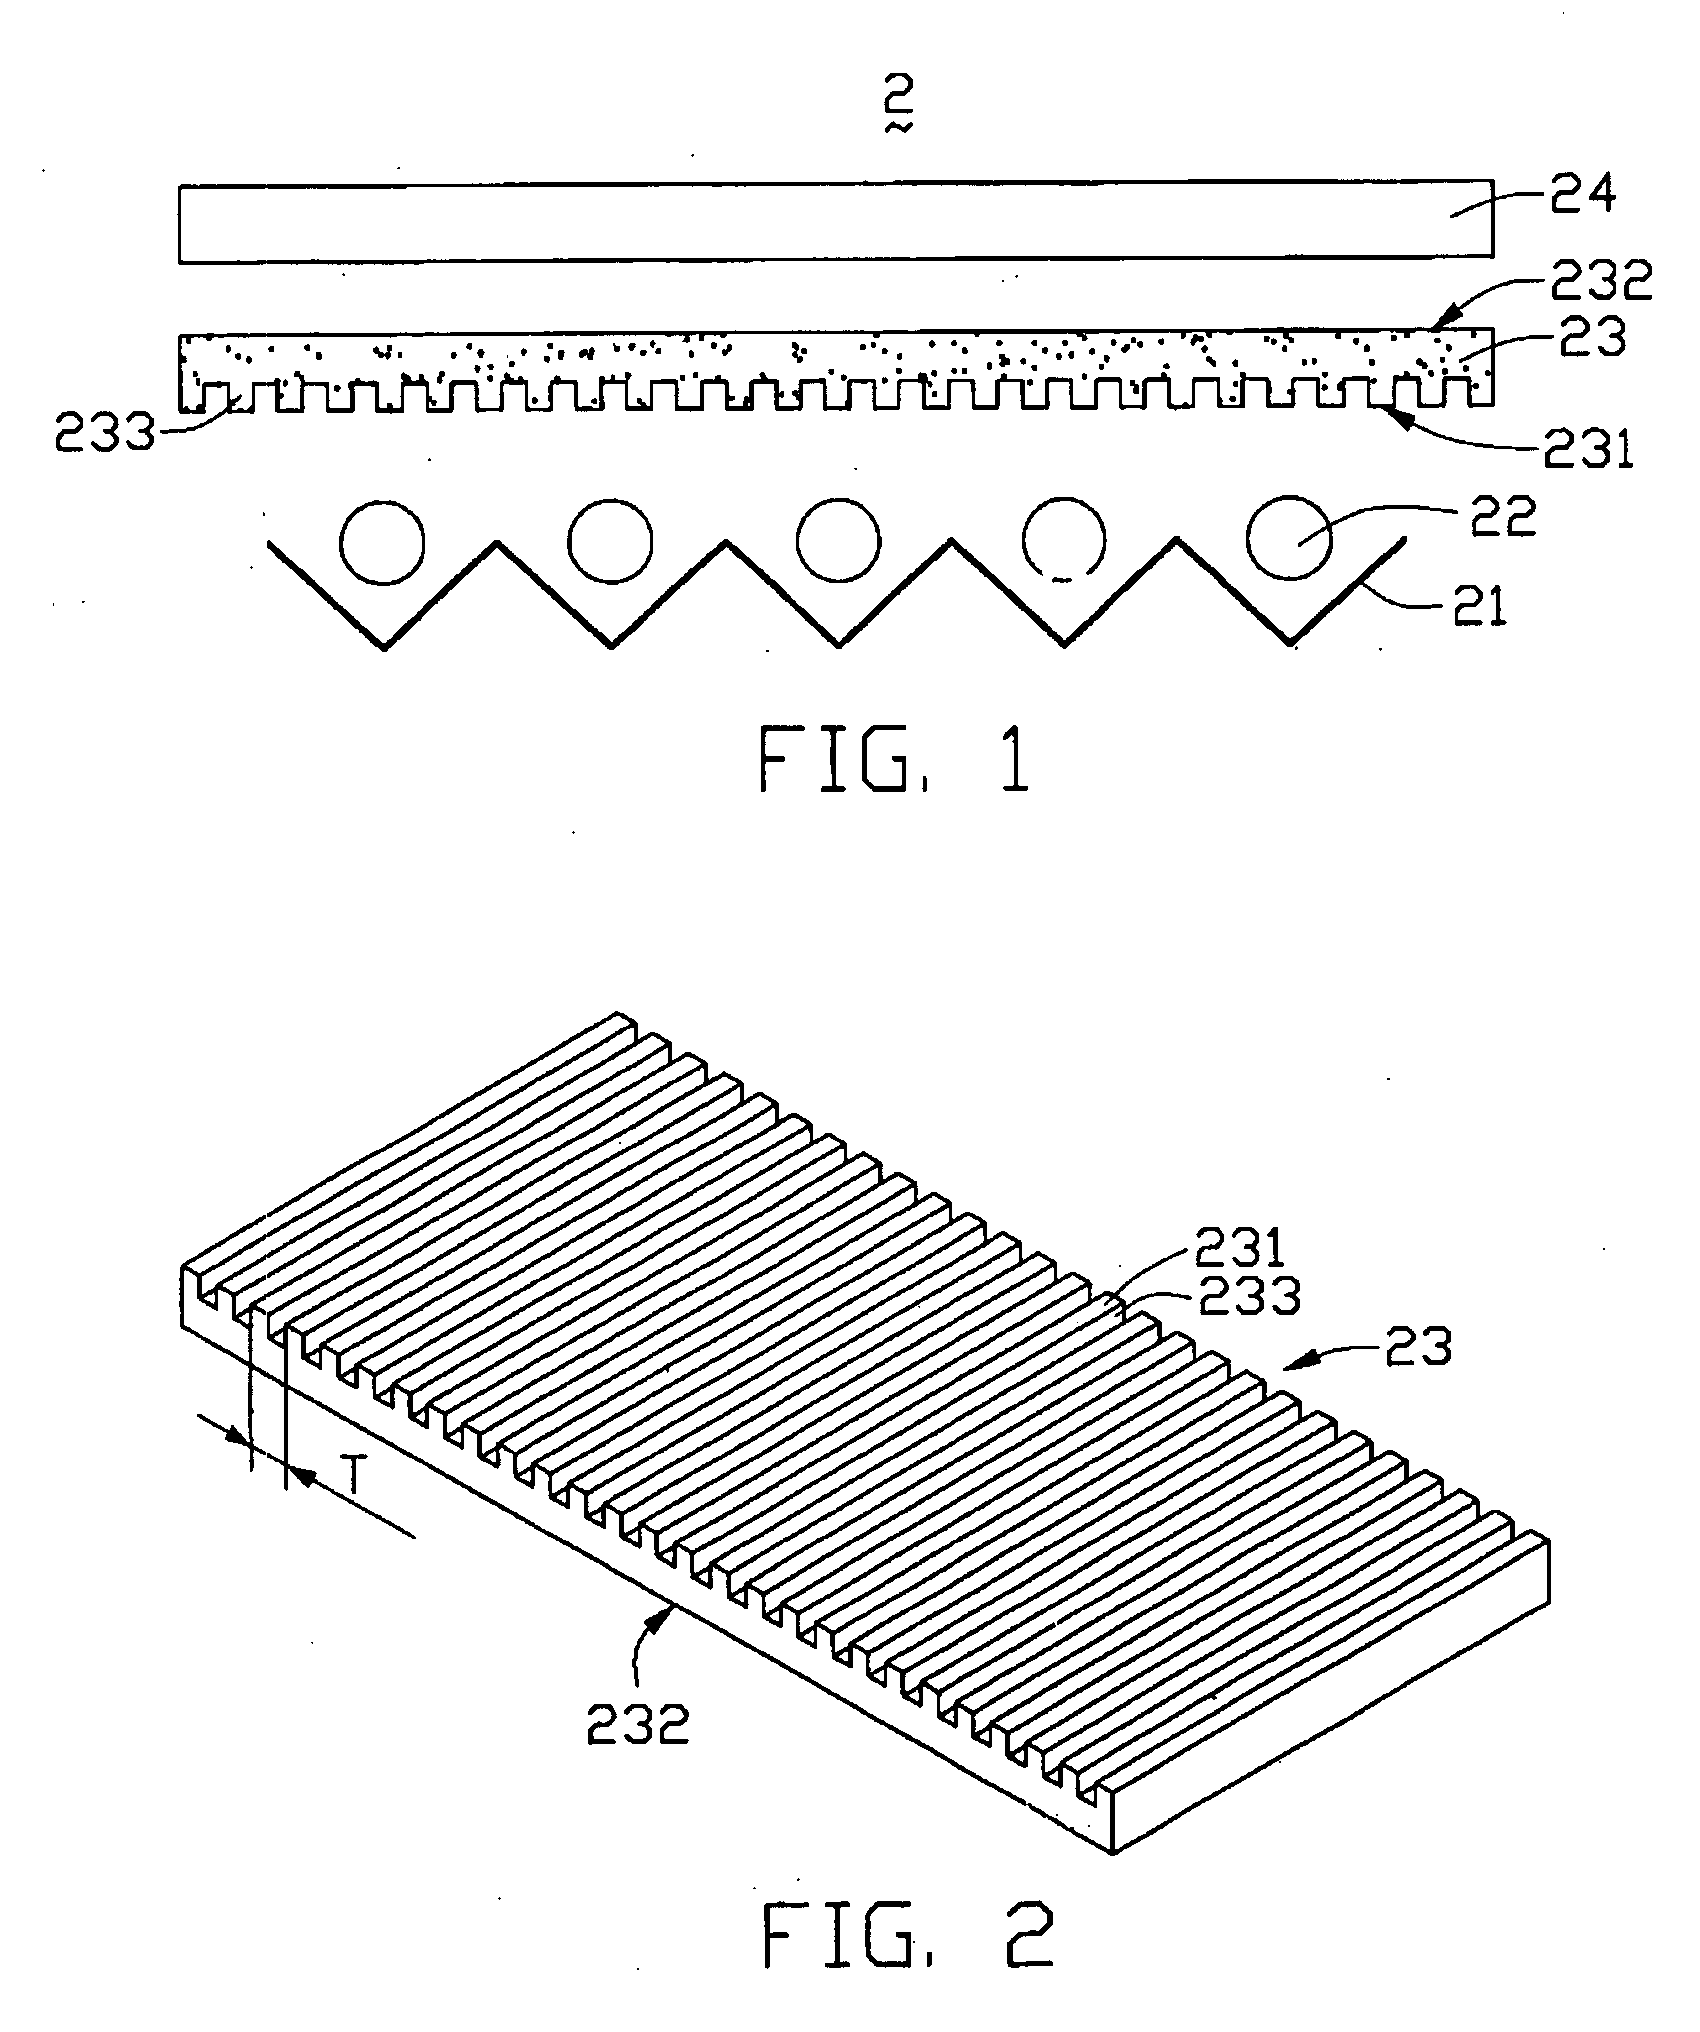 Backlight module with diffusion sheet having a subwavelength grating